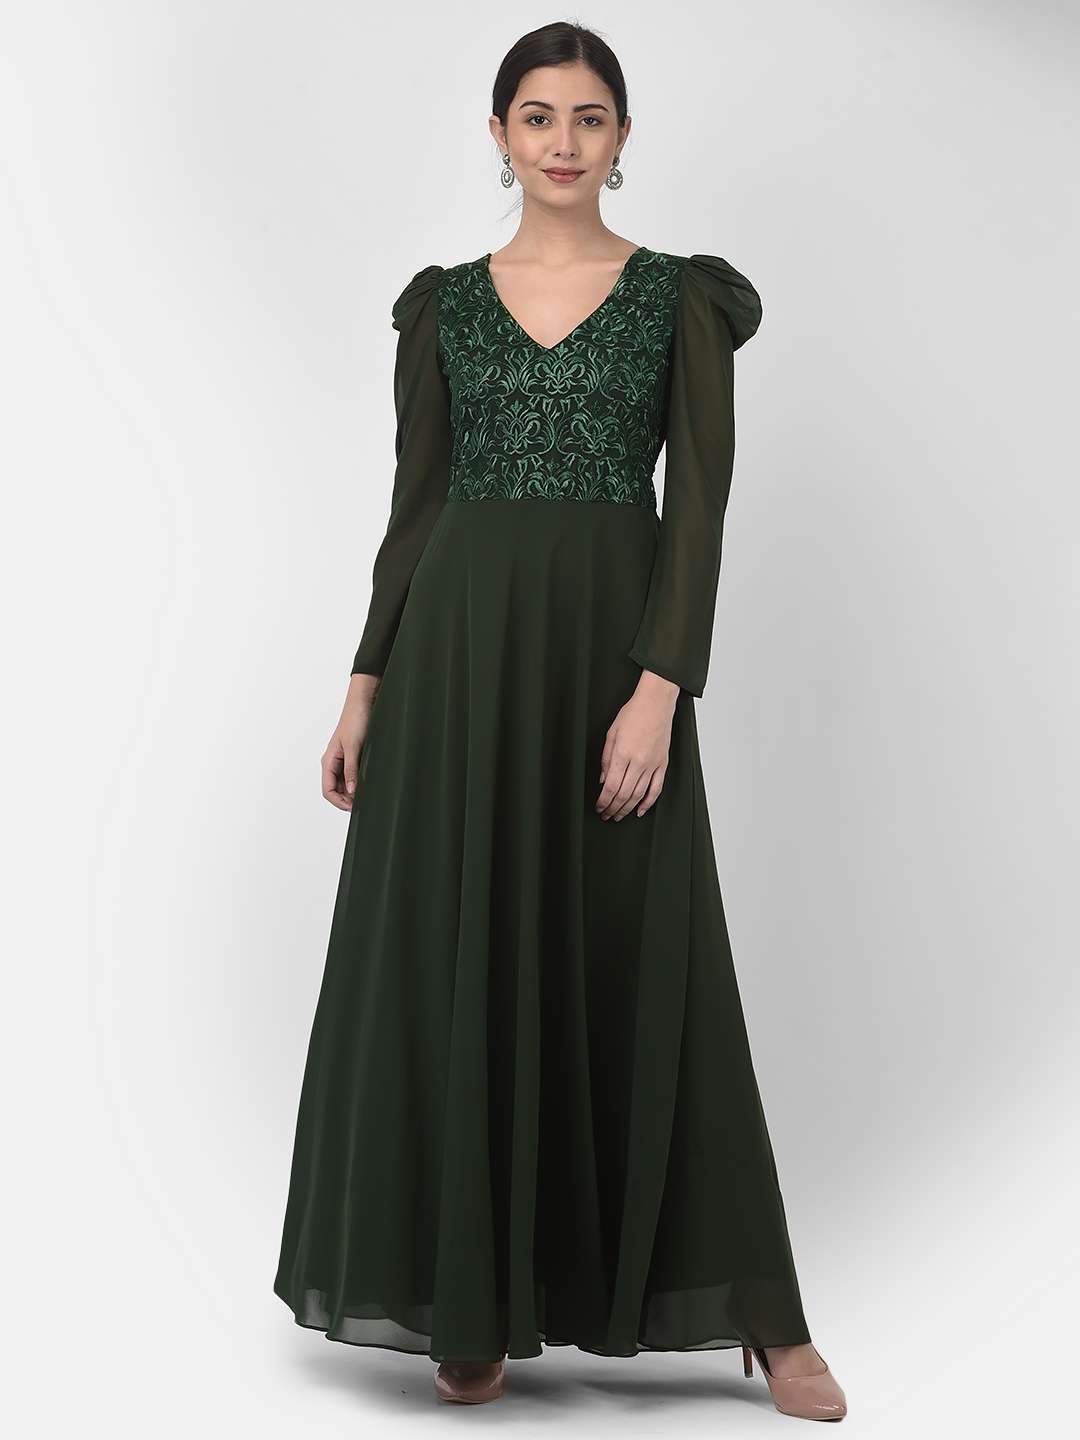 Eavan Dark Green Embroidered Maxi Dress